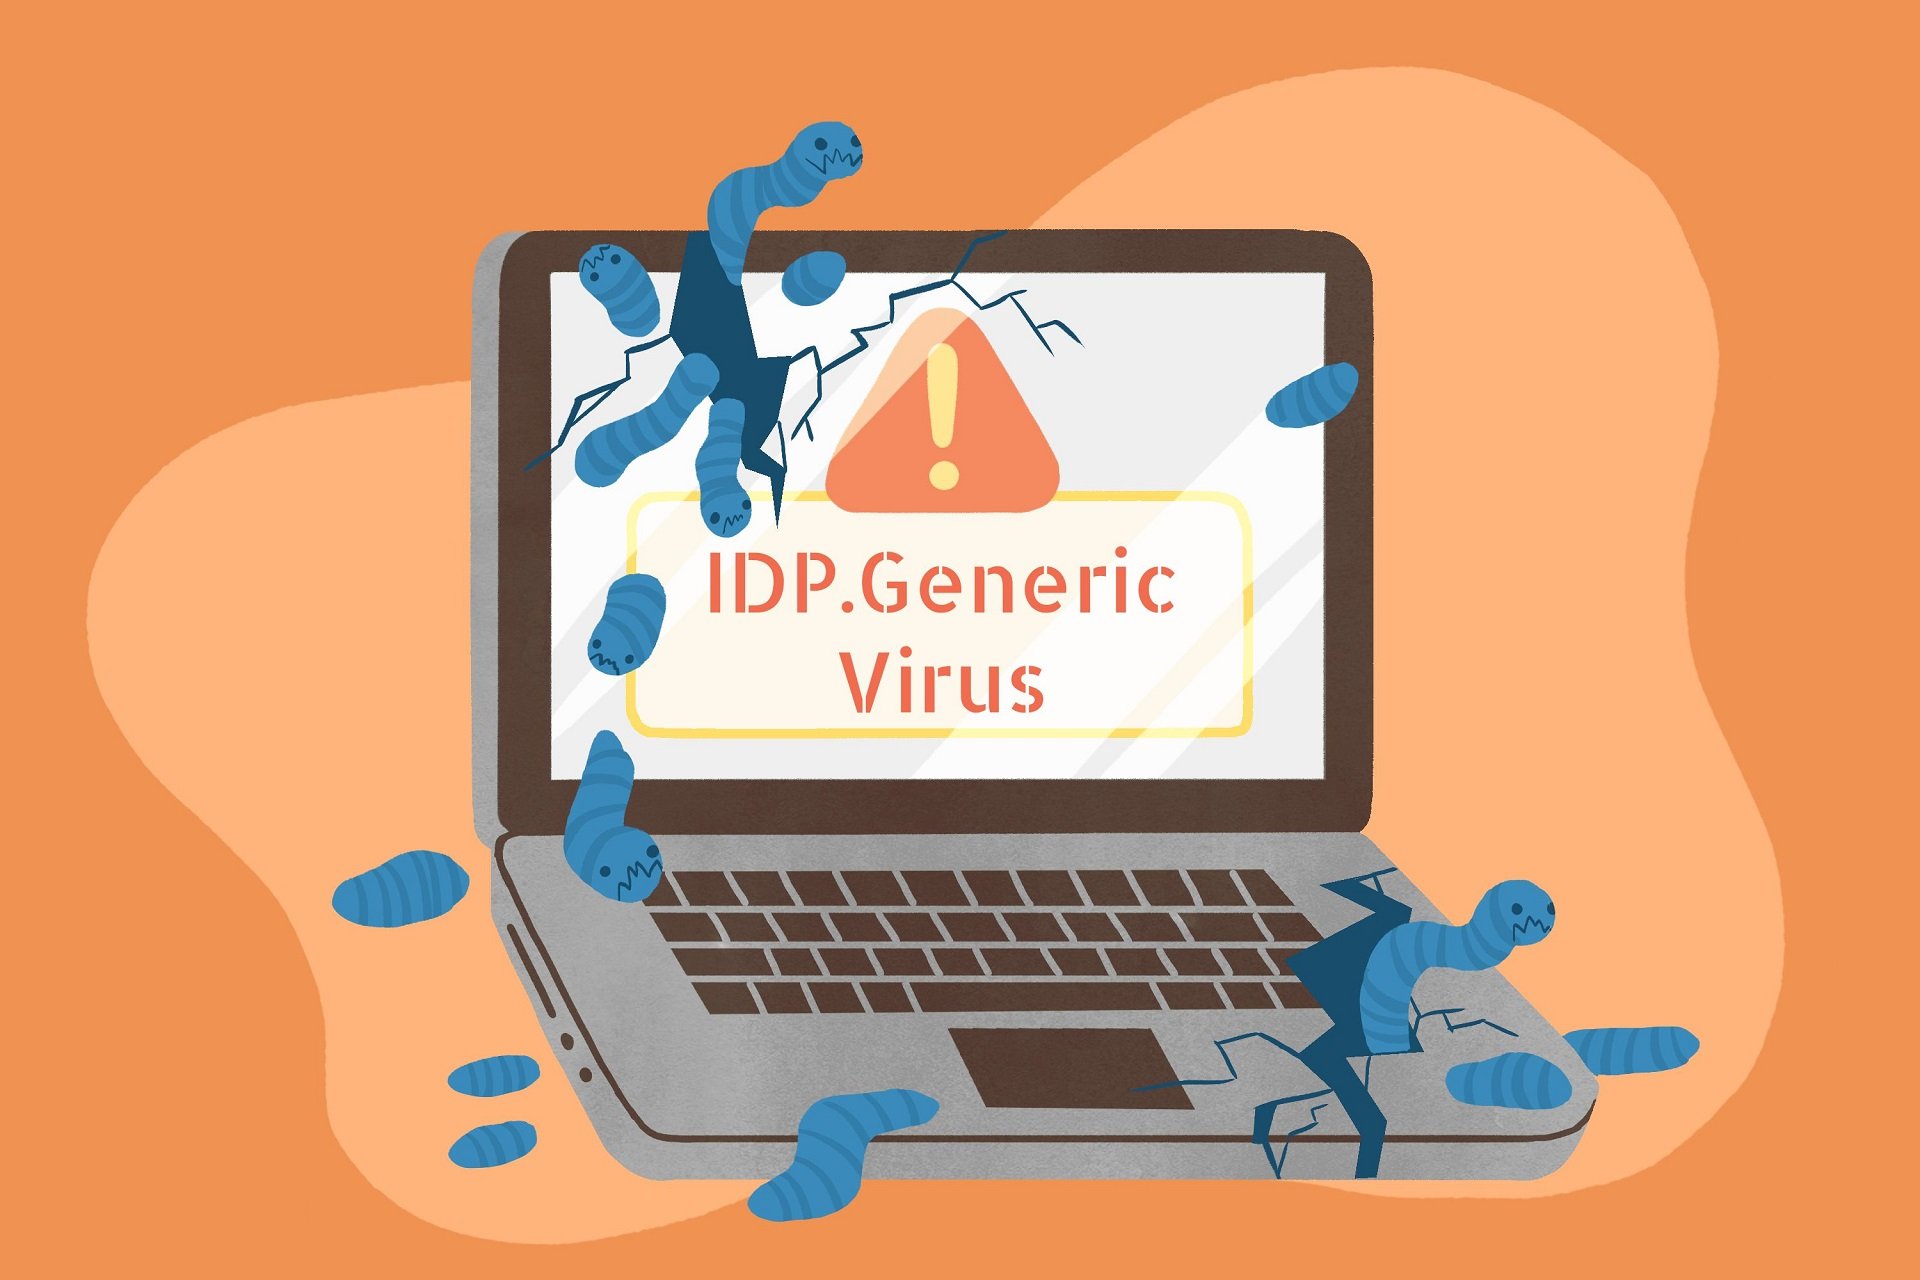 IDP Generic